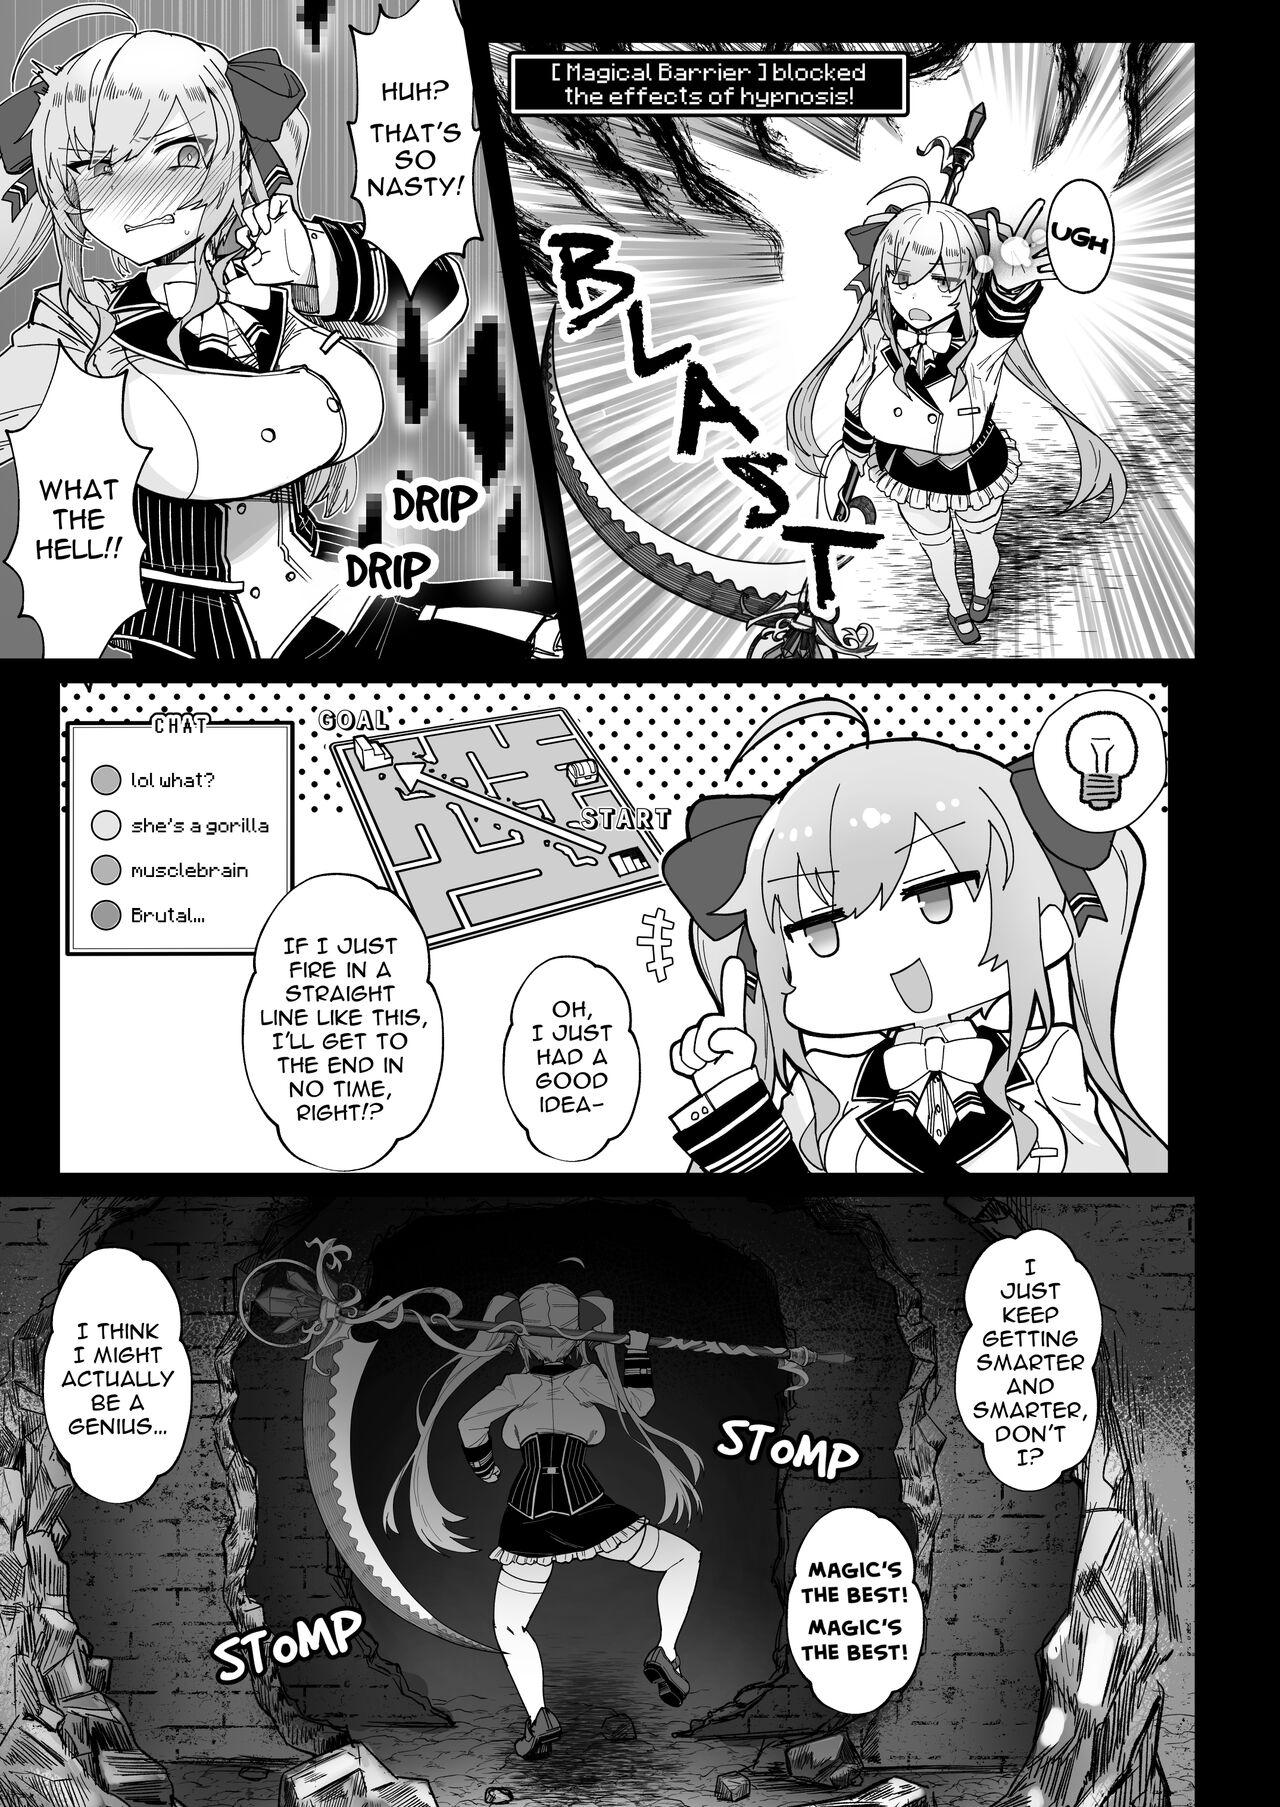 Twink Niji Ero Trap Dungeon Bu 2 - Nijisanji Ero trap dungeon Massage Creep - Page 6